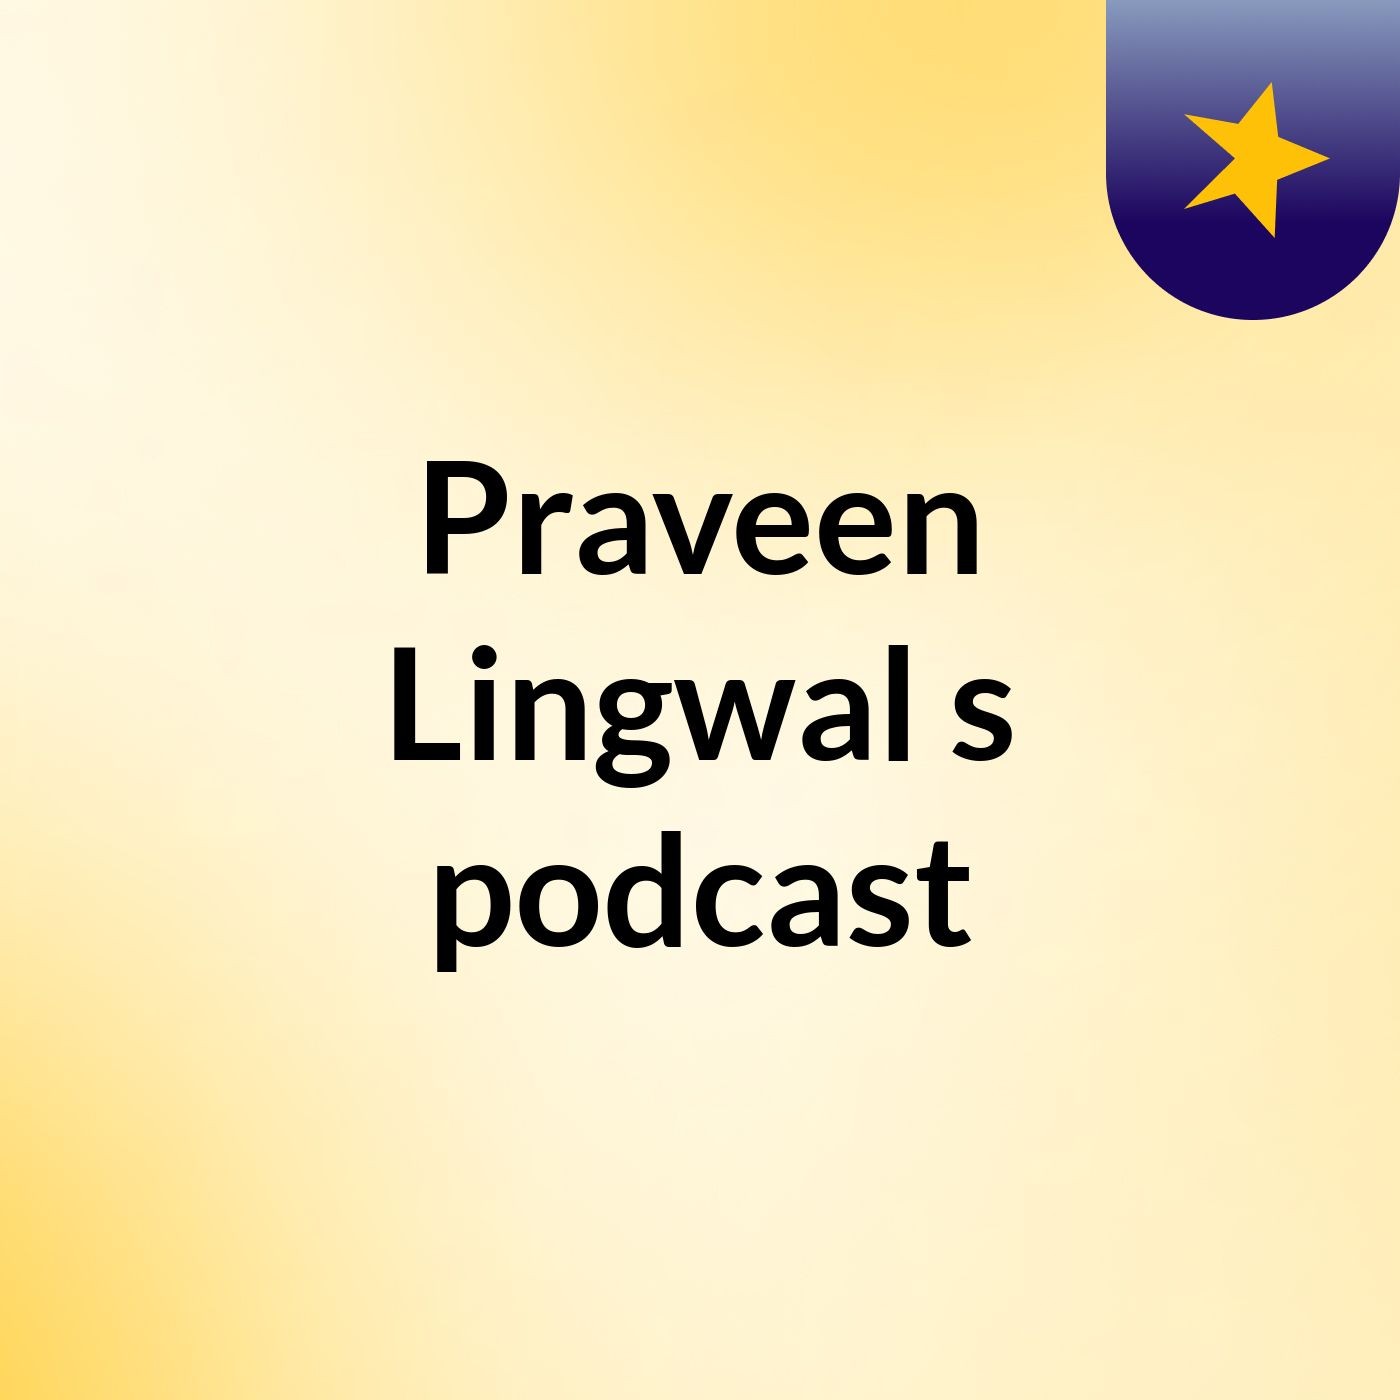 Episode 3 - Praveen Lingwal's podcast